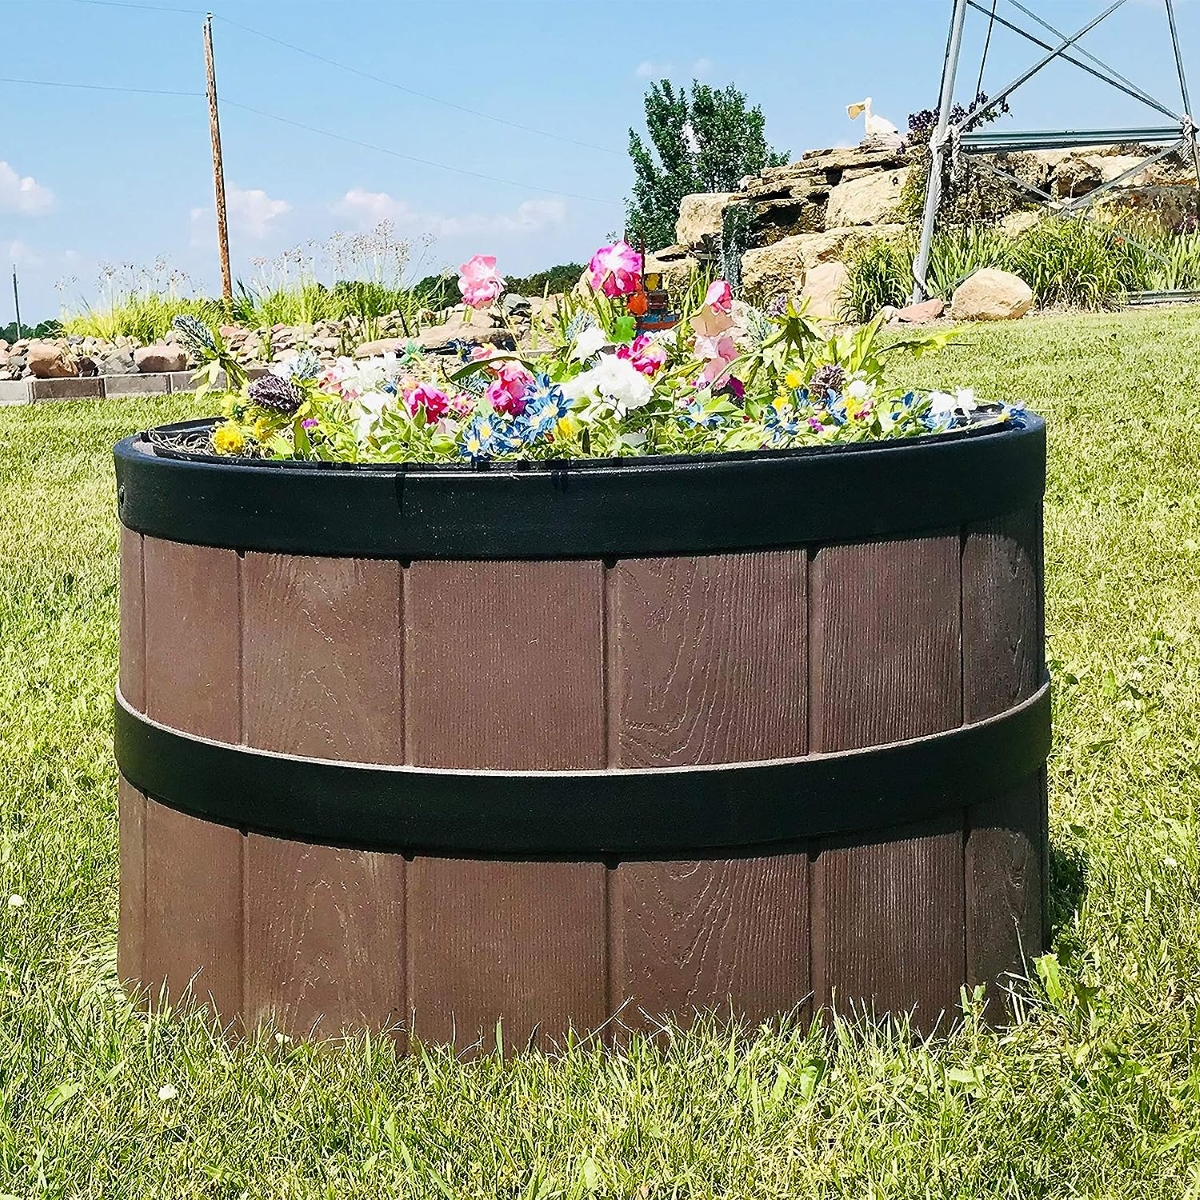 Plastic barrel flower planter